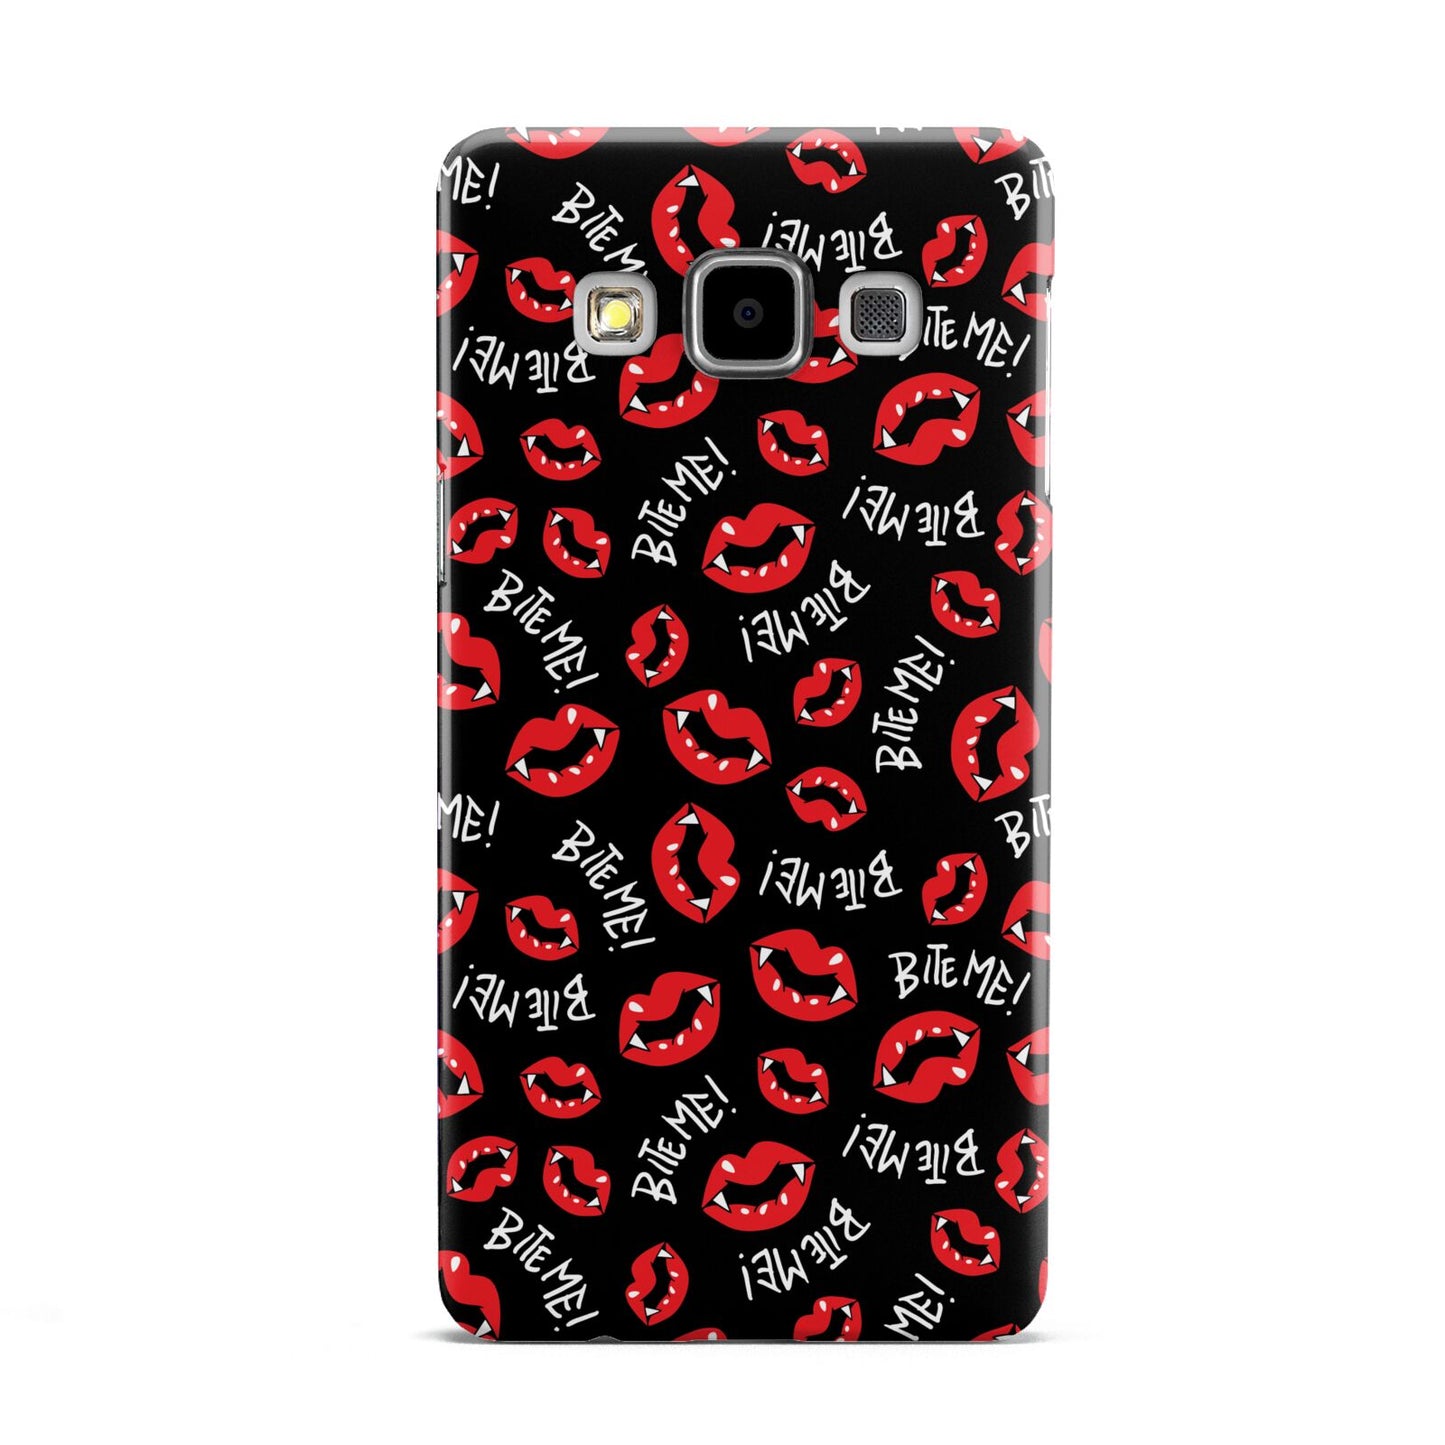 Vampire Bite Me Samsung Galaxy A5 Case